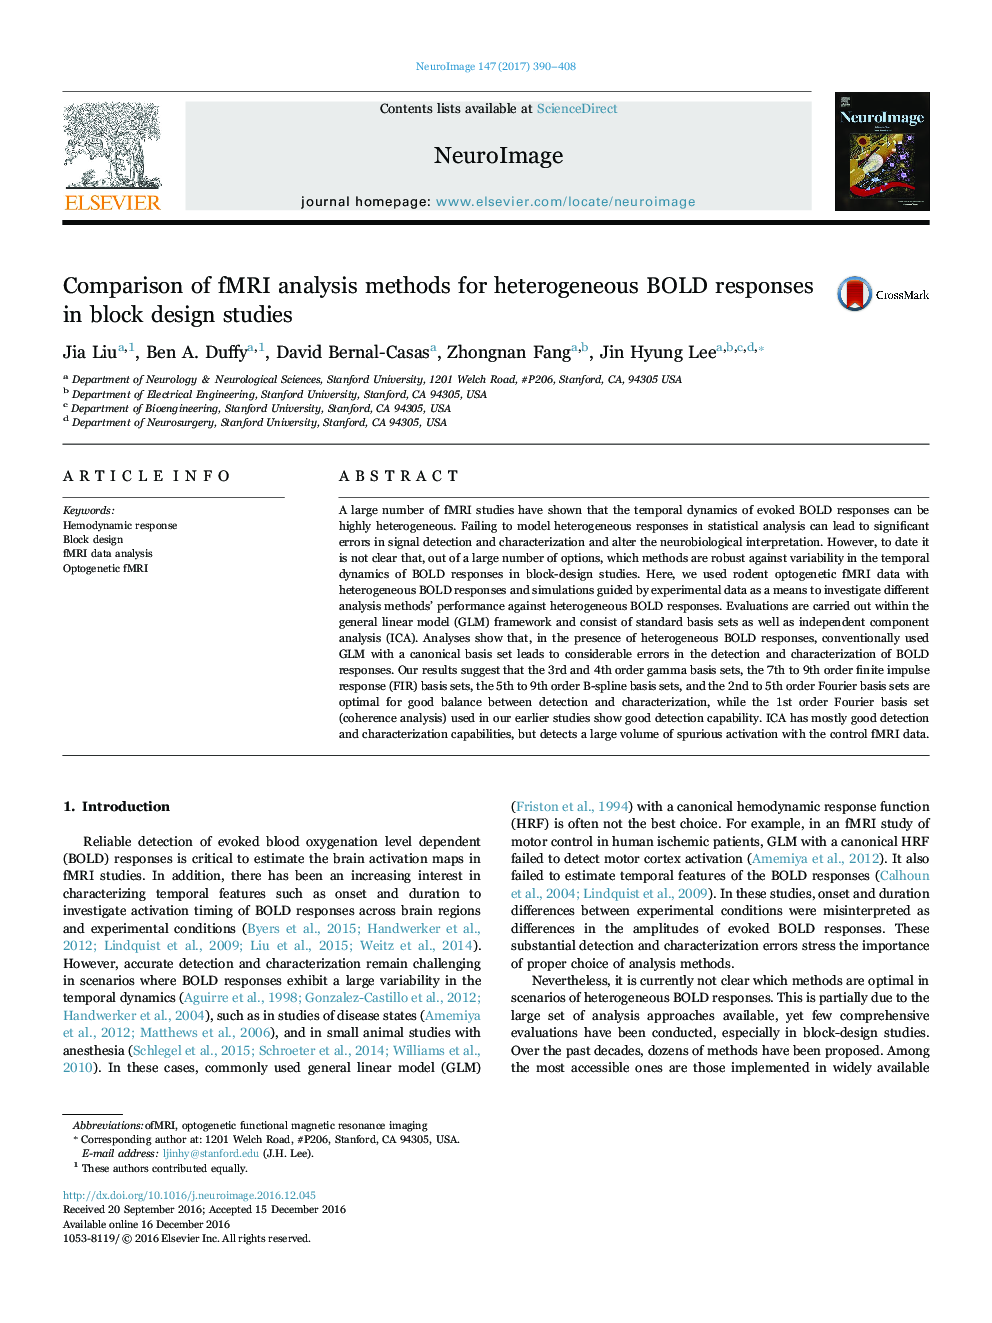 Comparison of fMRI analysis methods for heterogeneous BOLD responses in block design studies